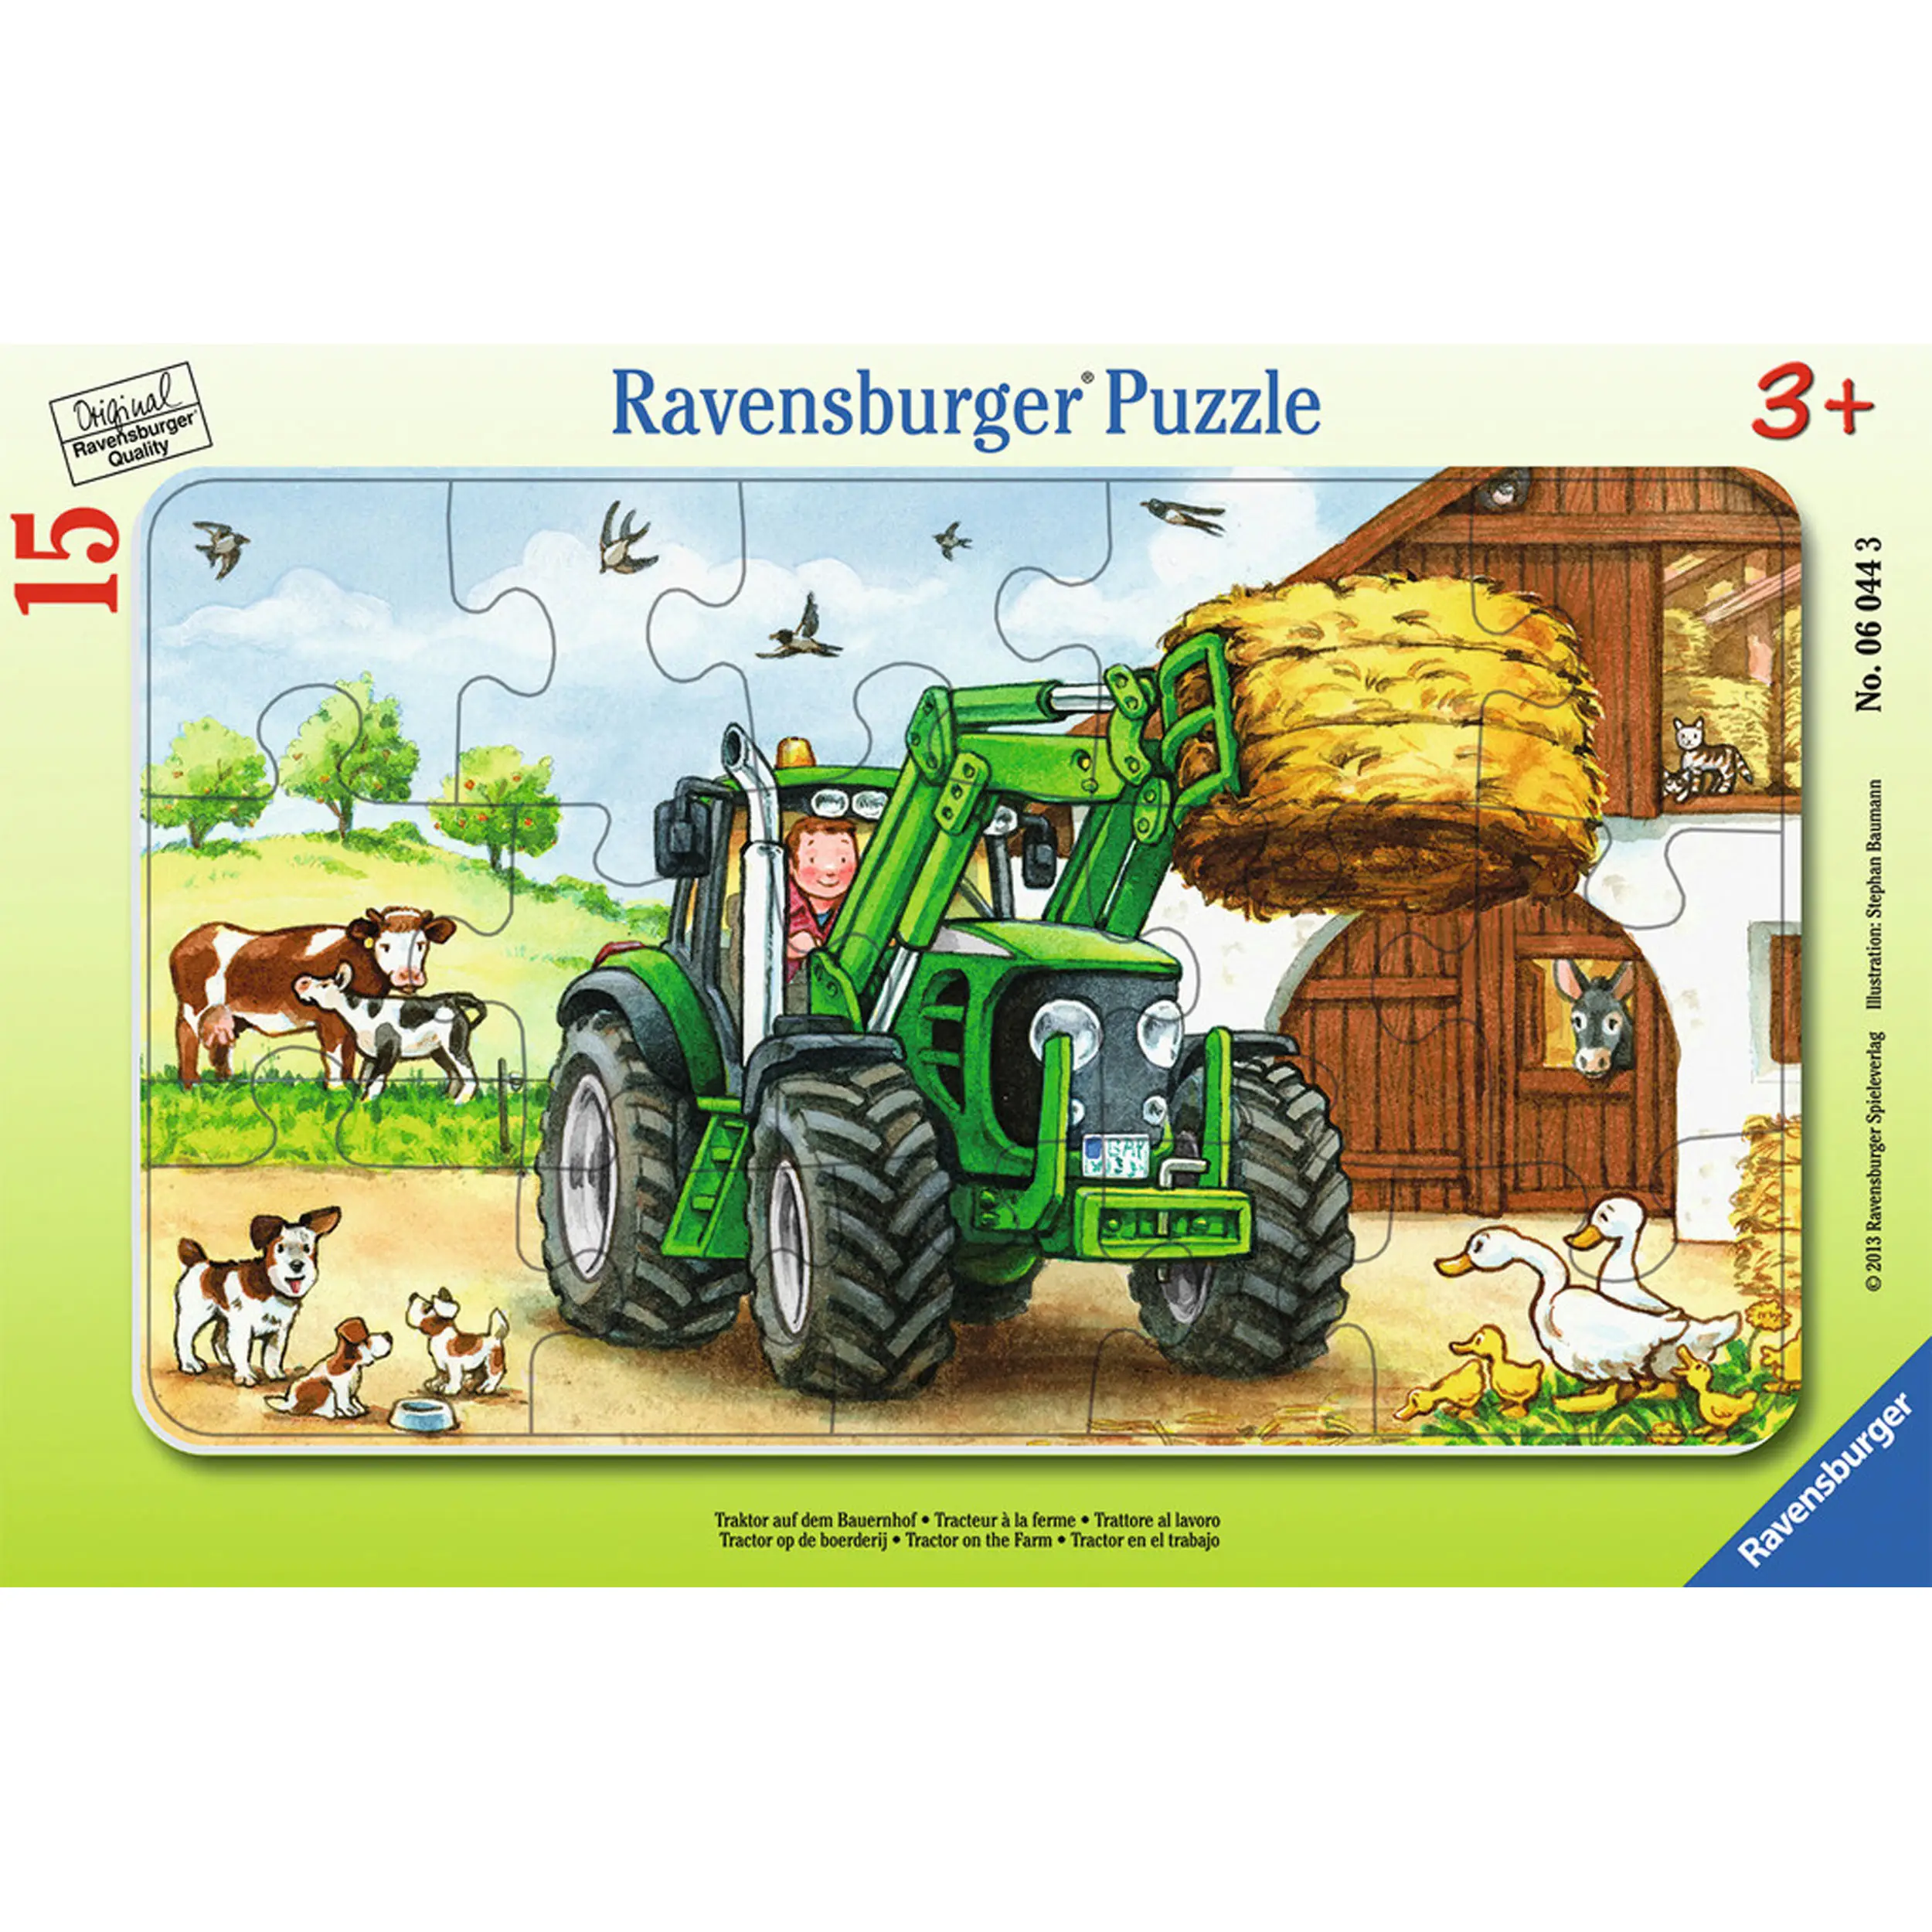 Bauernhof Dem Puzzle Traktor Auf